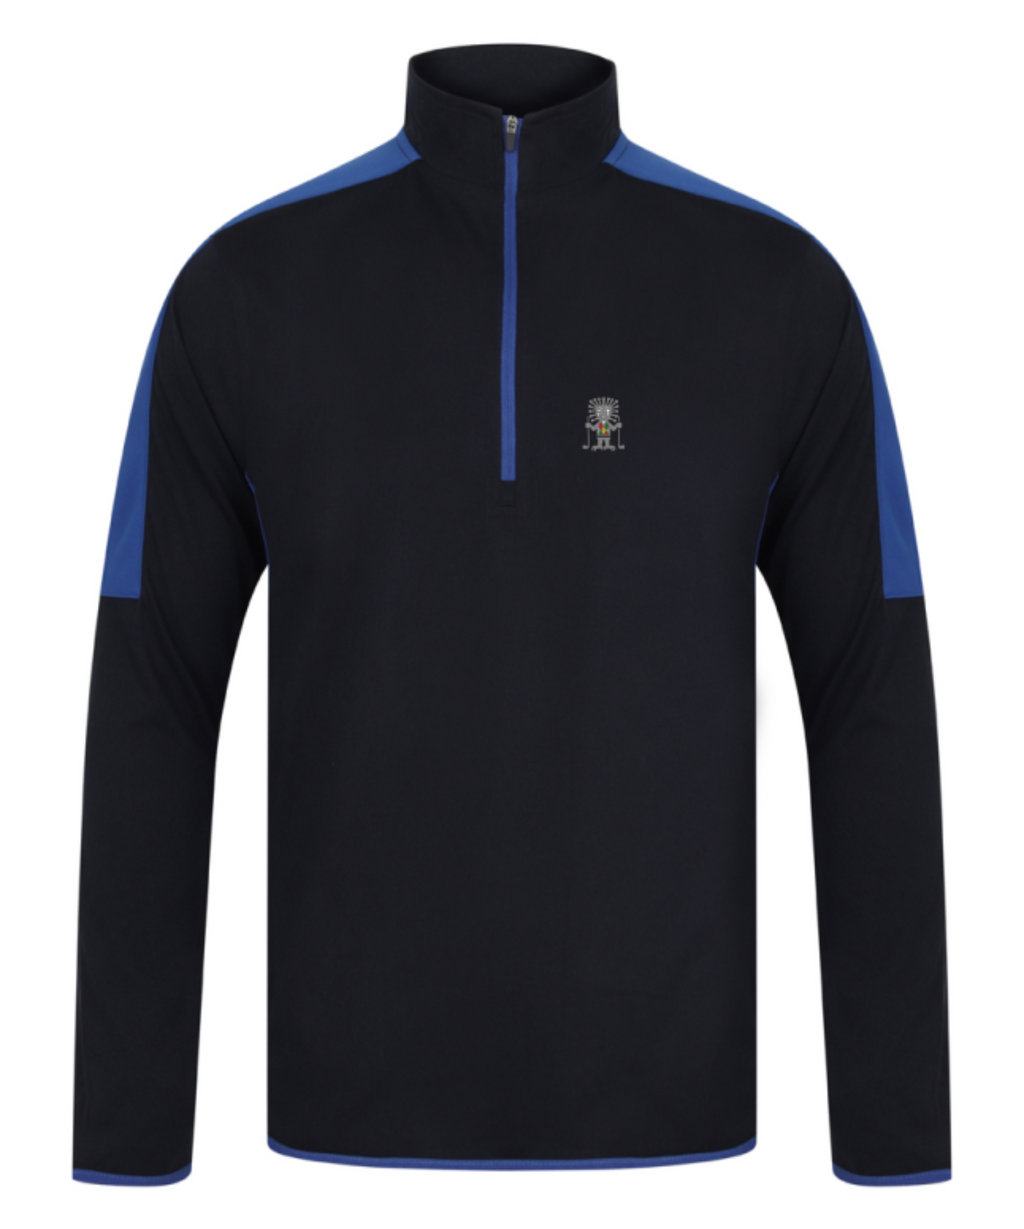 Golf god clothing ultra light quarter zip mid layer 